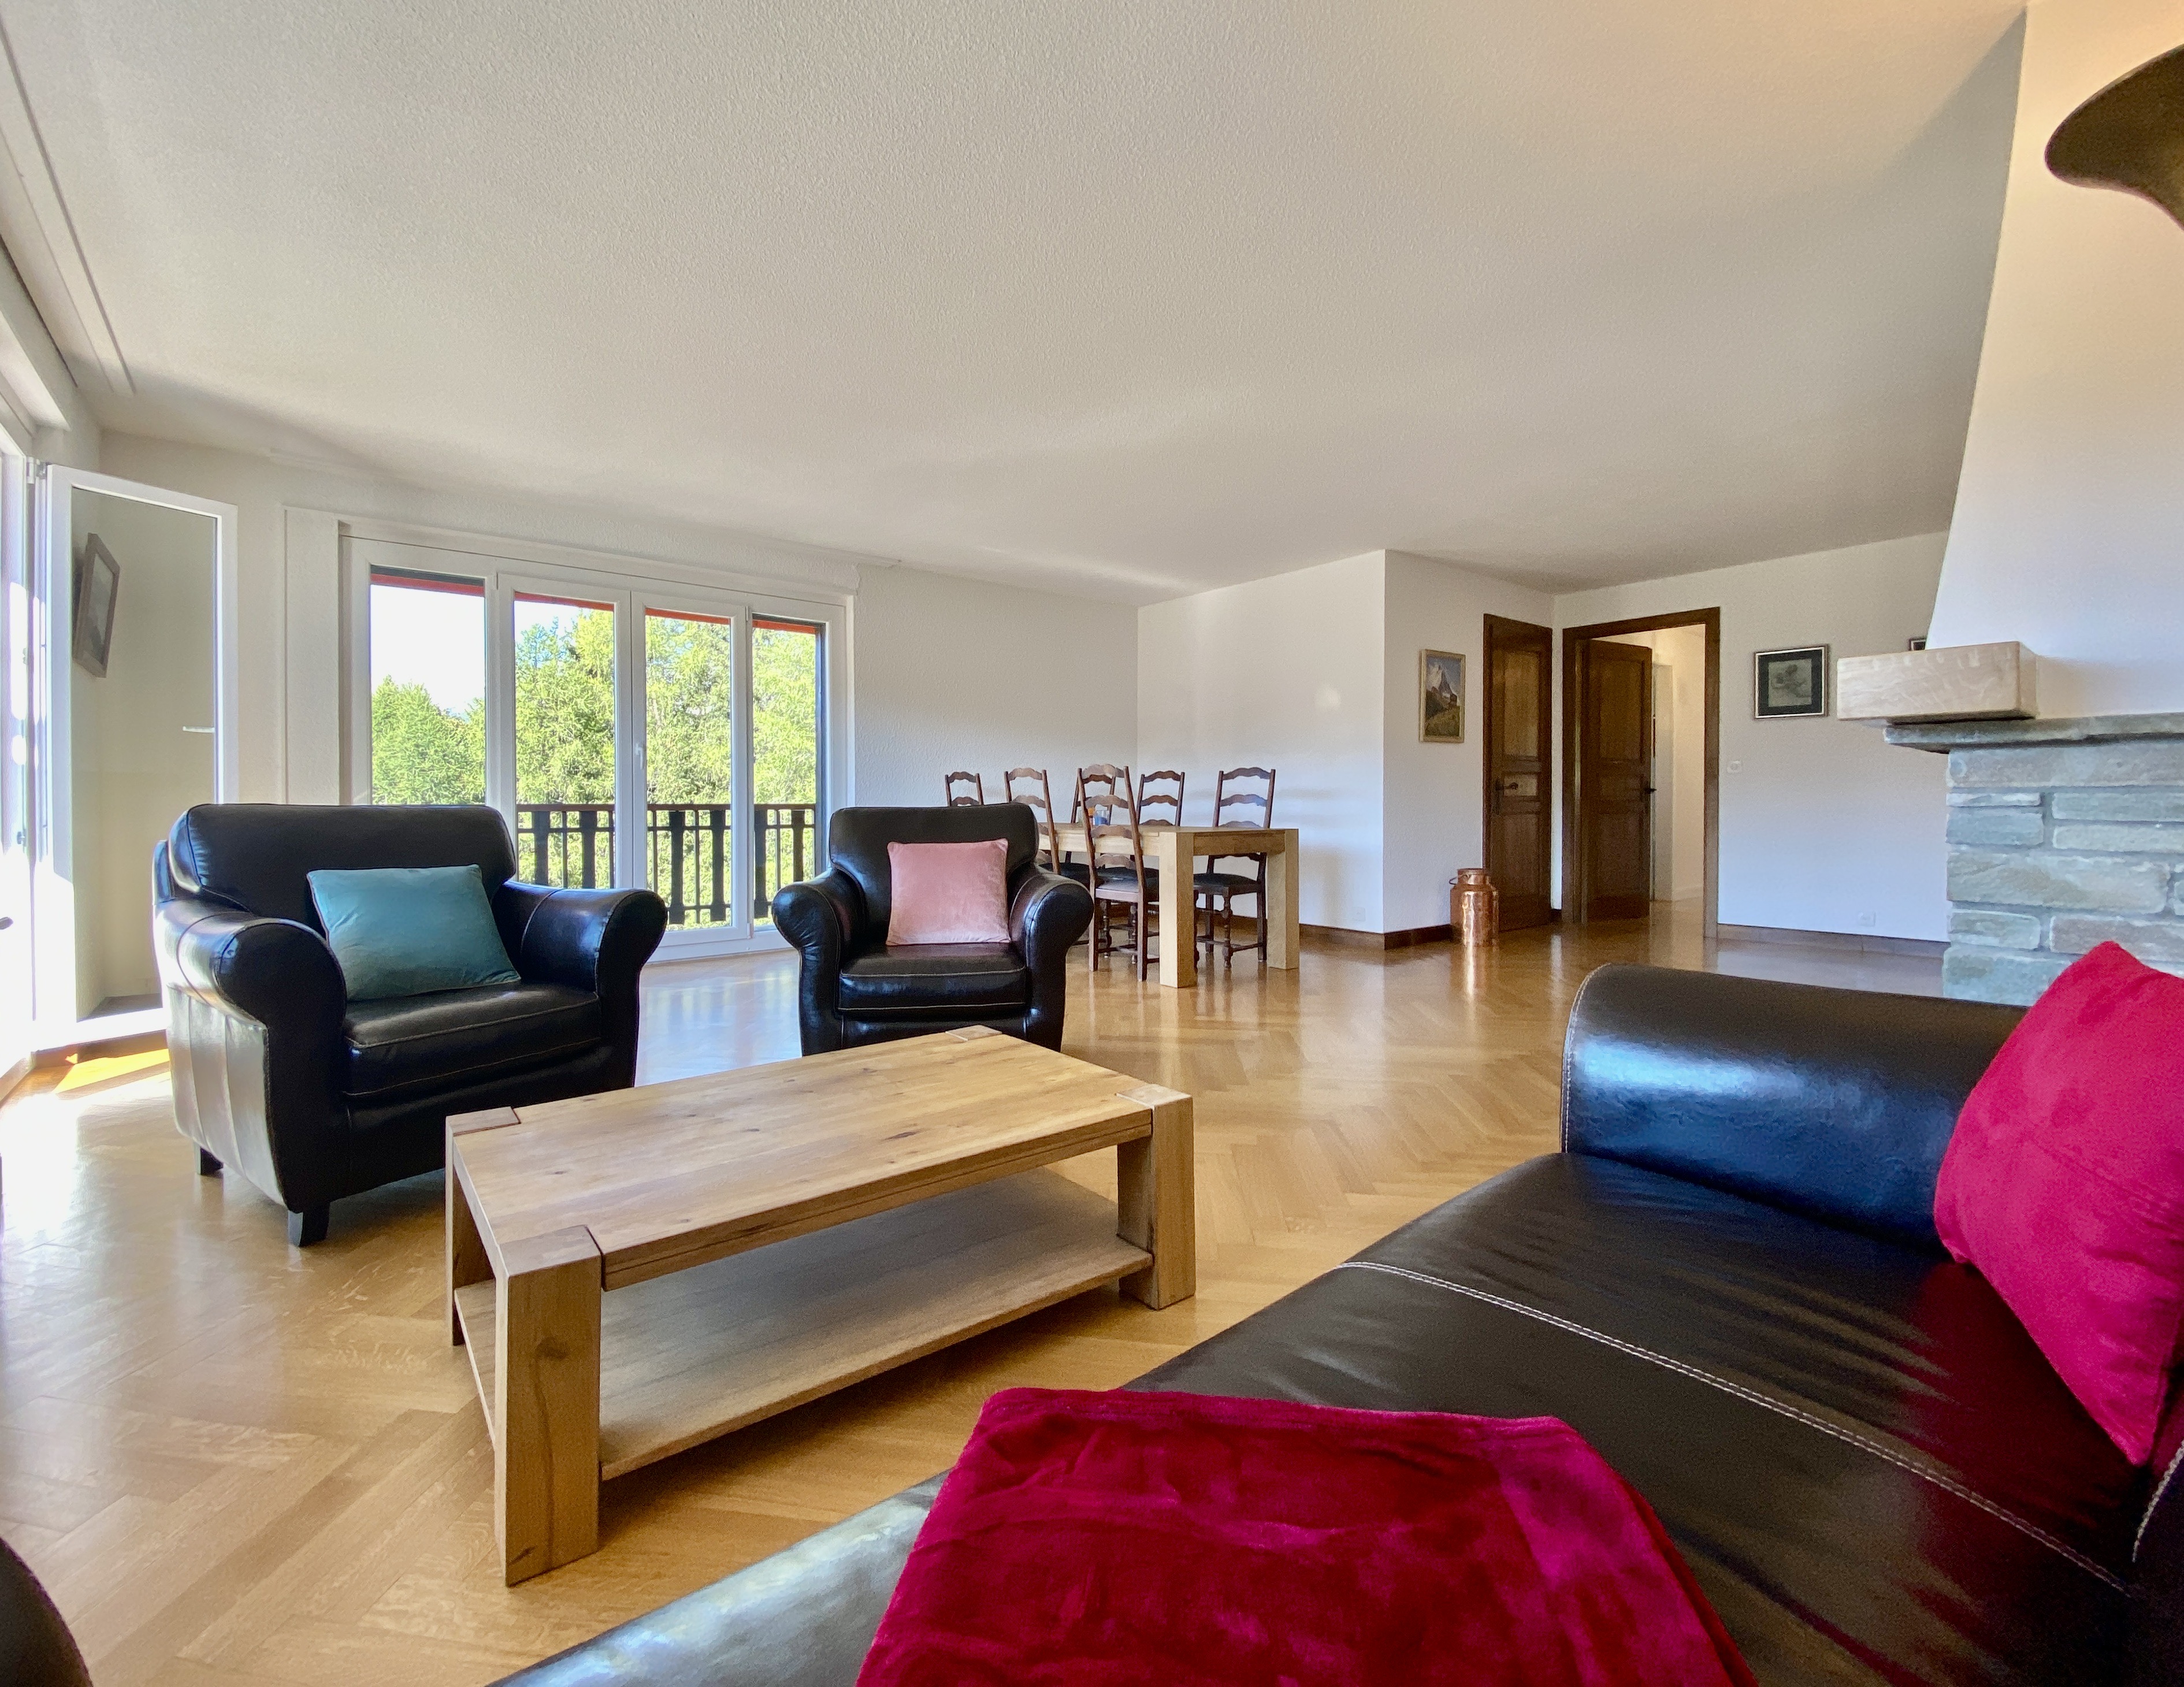 location-appartement-apartment-a-louer-to-rent-crans-montana-semaine-valais-wallis-suisse-switzerland-properties-sunimmo-mysunimmo-bysunimmo0